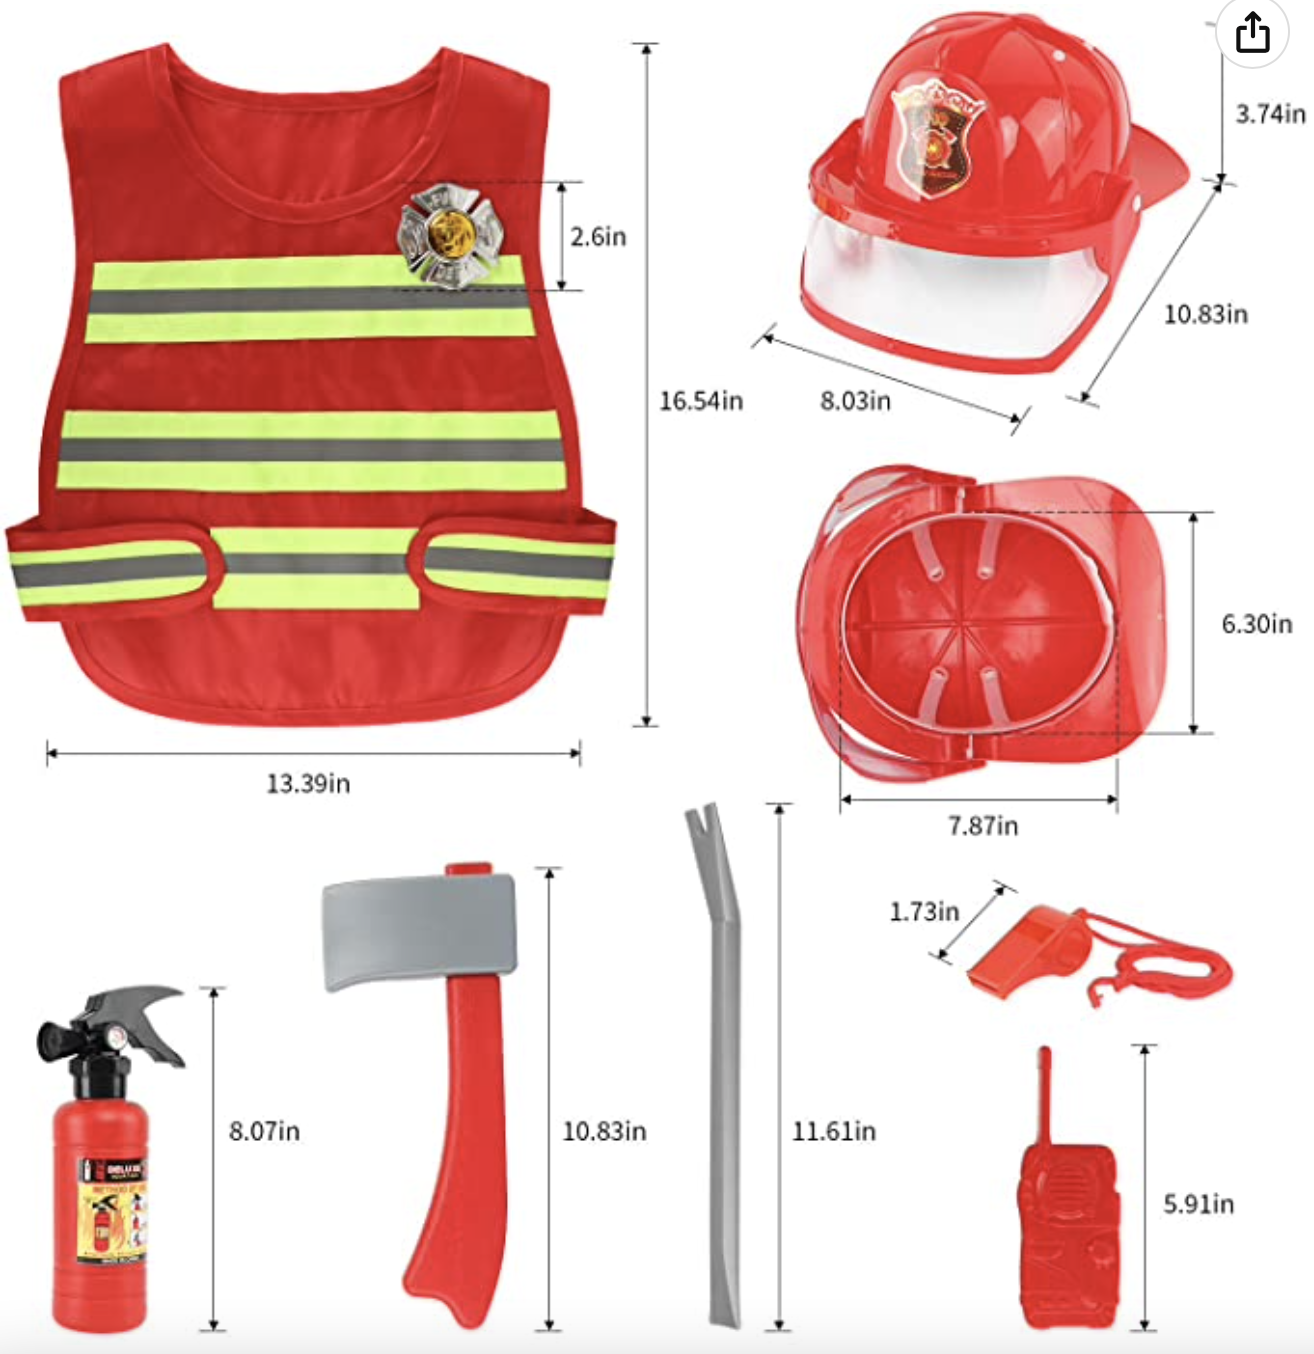 Melissa & Doug Juego de disfraz de Jefe de Bomberos - Disfraz de bombero  con accesorios realistas, disfraz de bombero para niños y niños pequeños a